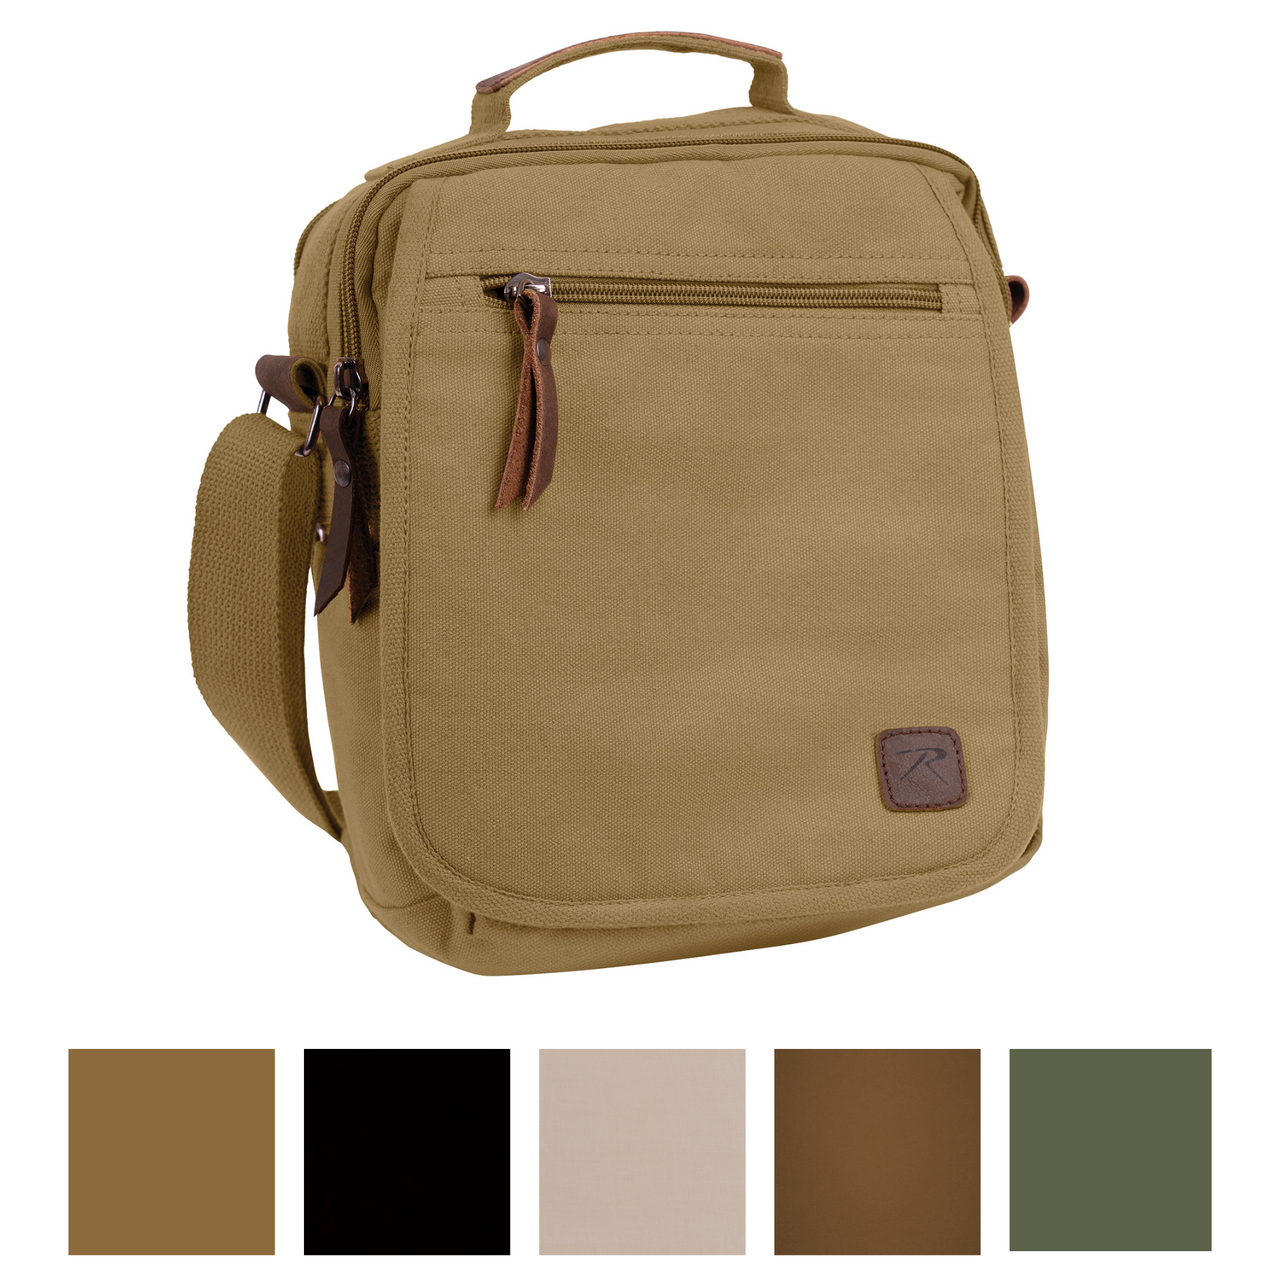 Nylon 3 Layer Sling Bags,Travel Purses, Shoulder Bag at Rs 550 in New Delhi